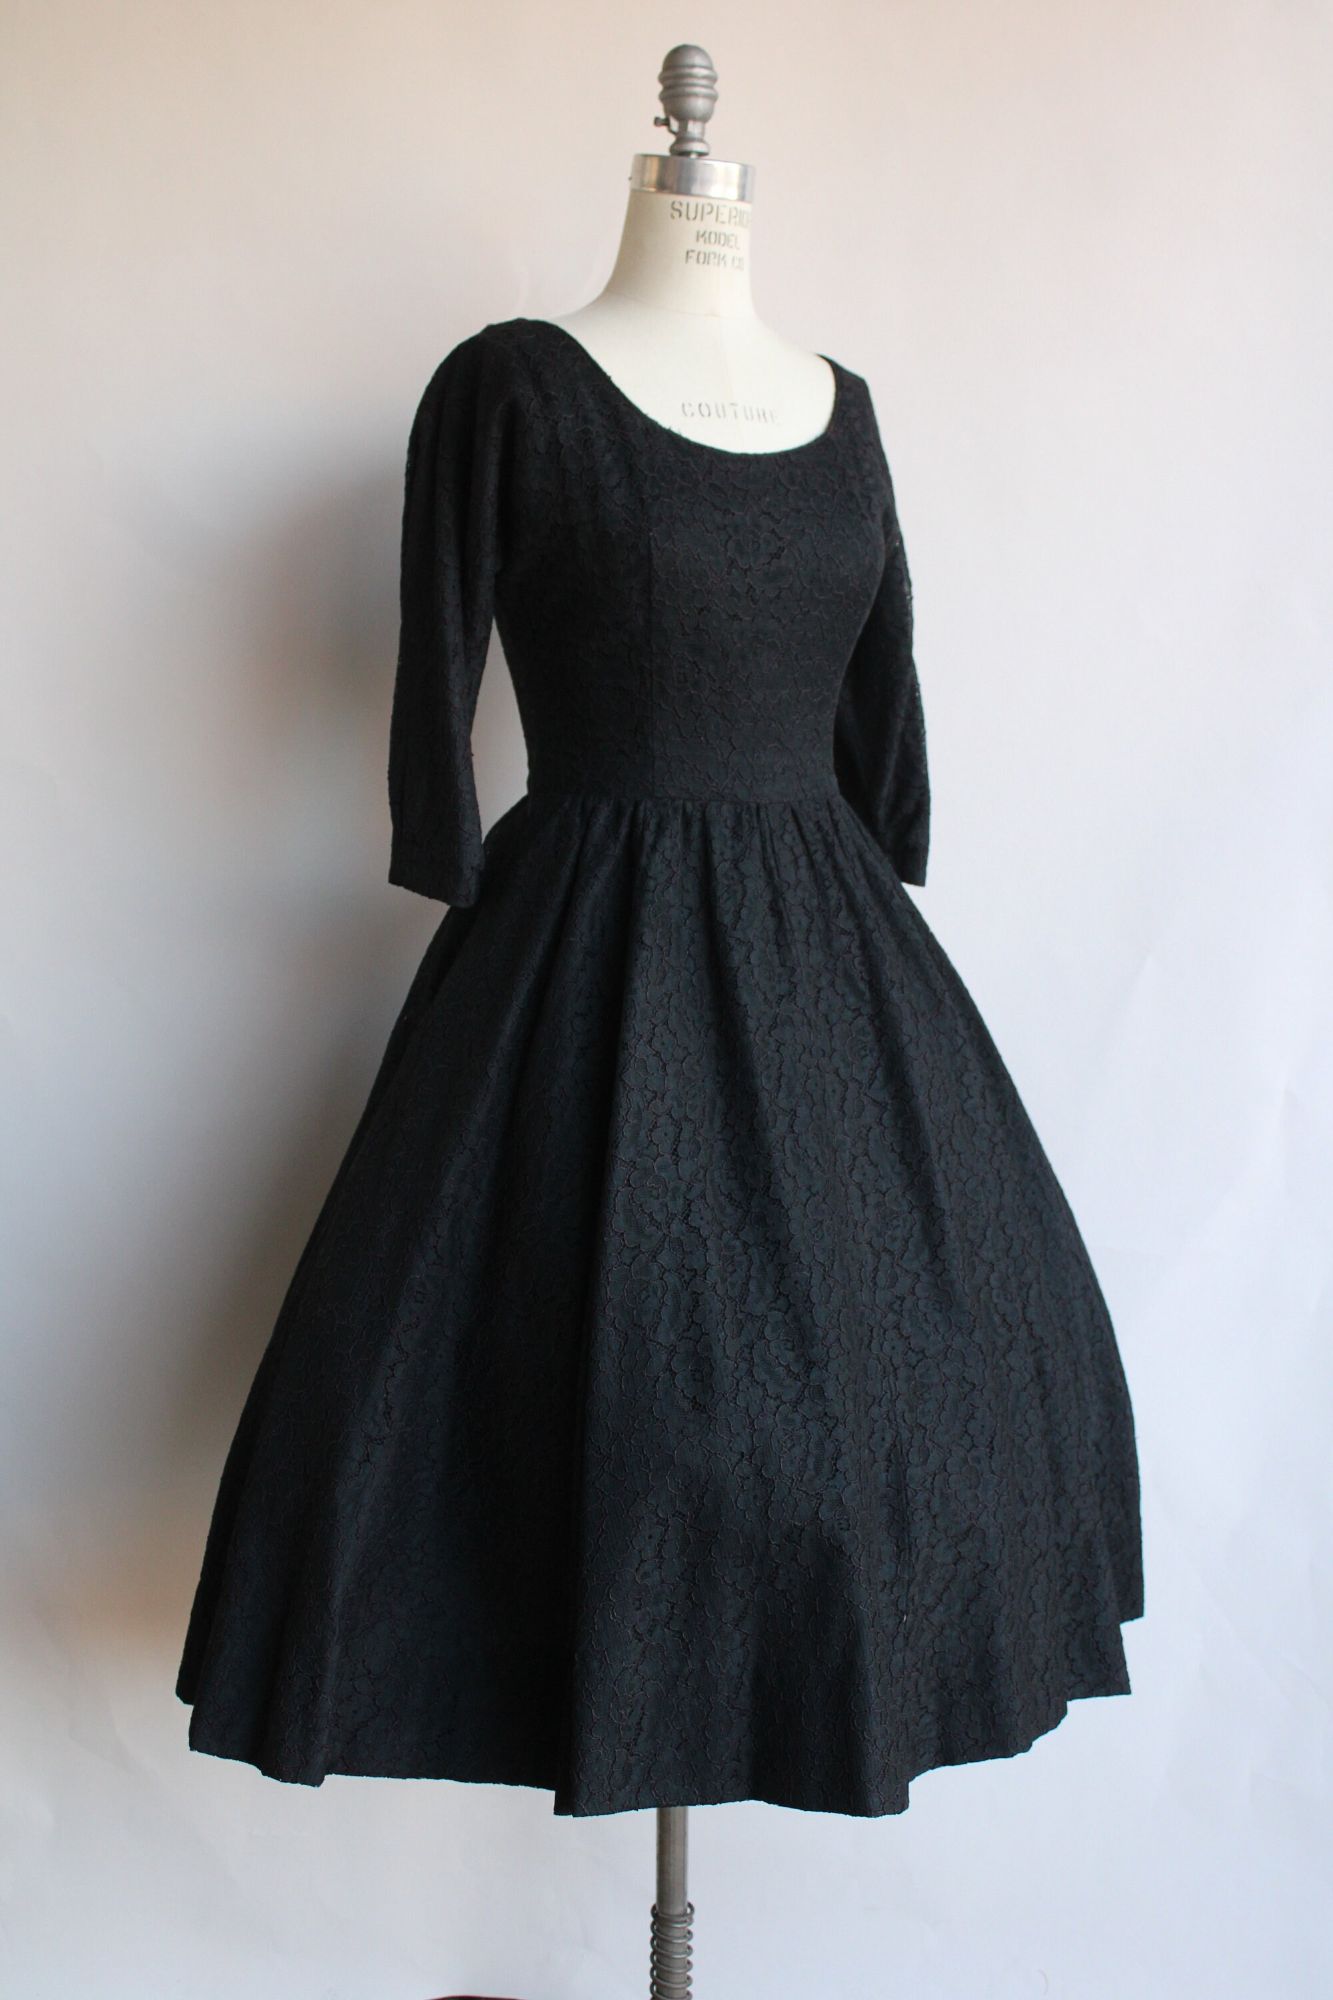 Vintage 1950s Black Lace Dress with Pocket